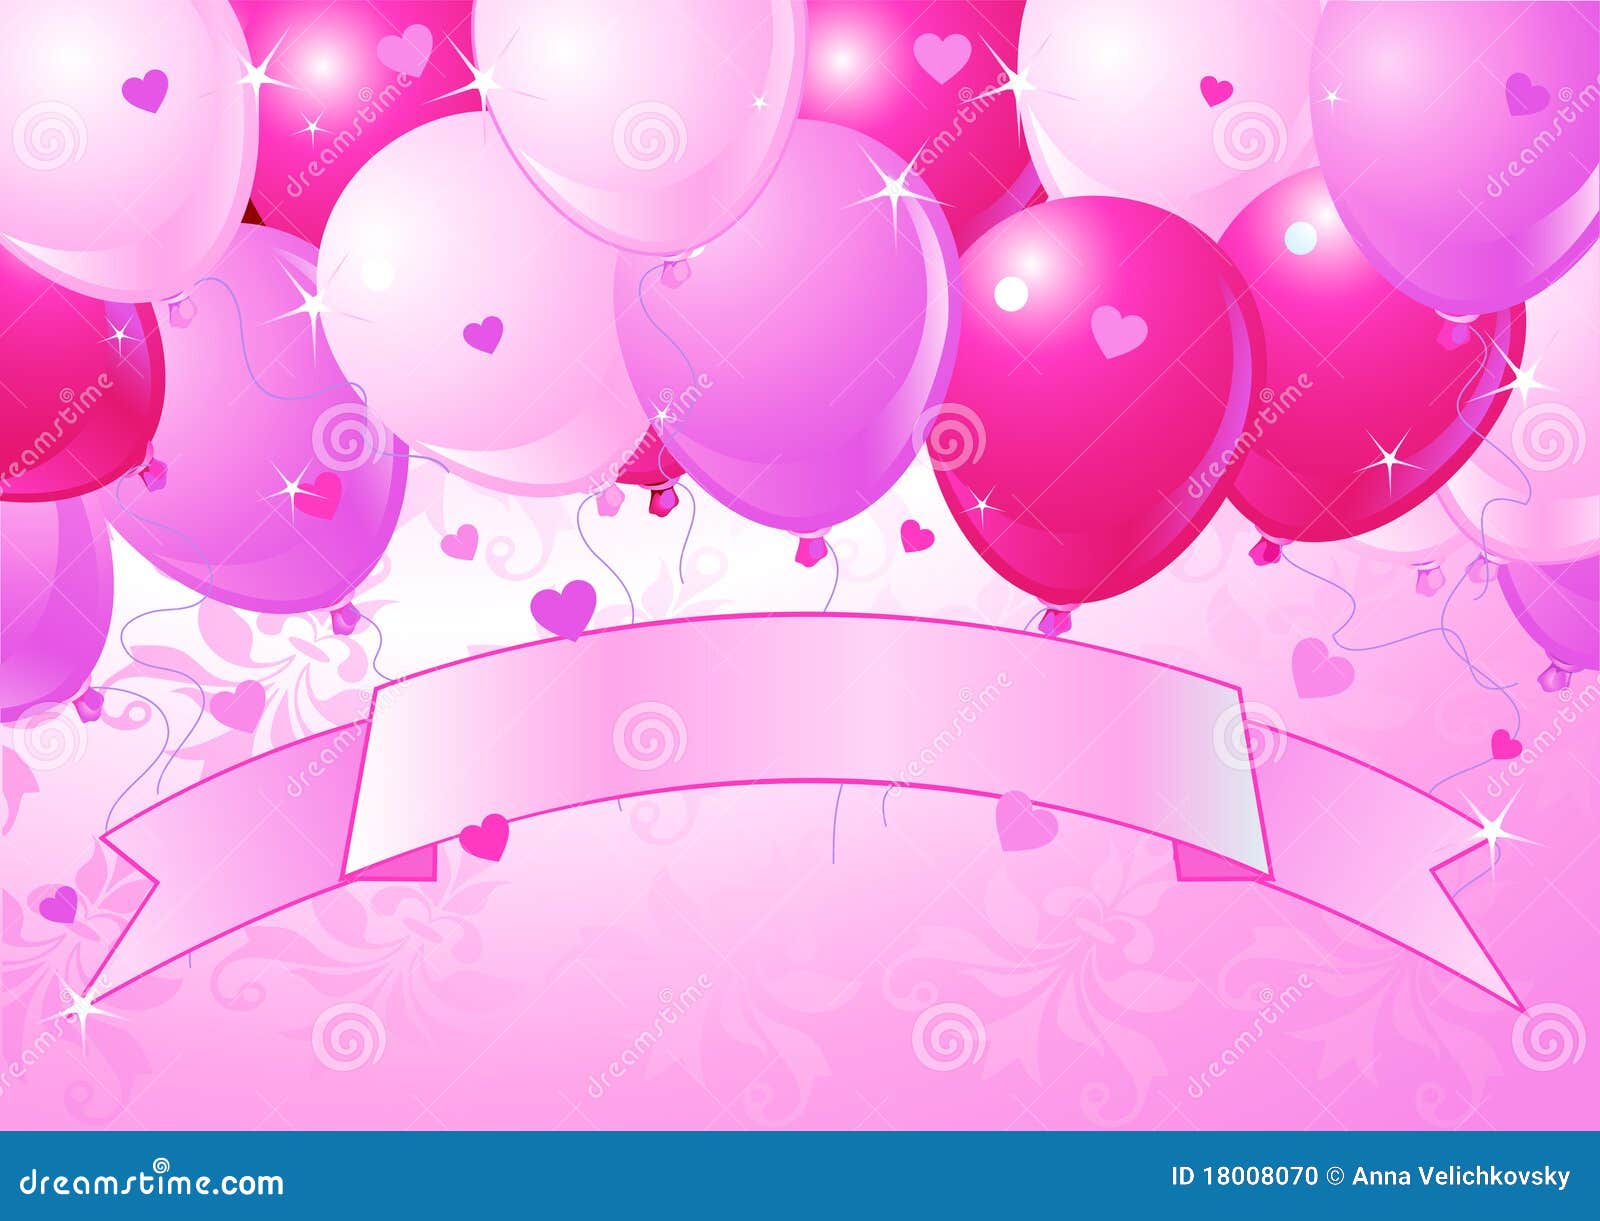 Falling Pink Valentine Balloons Stock Vector - Illustration of invitation,  love: 18008070